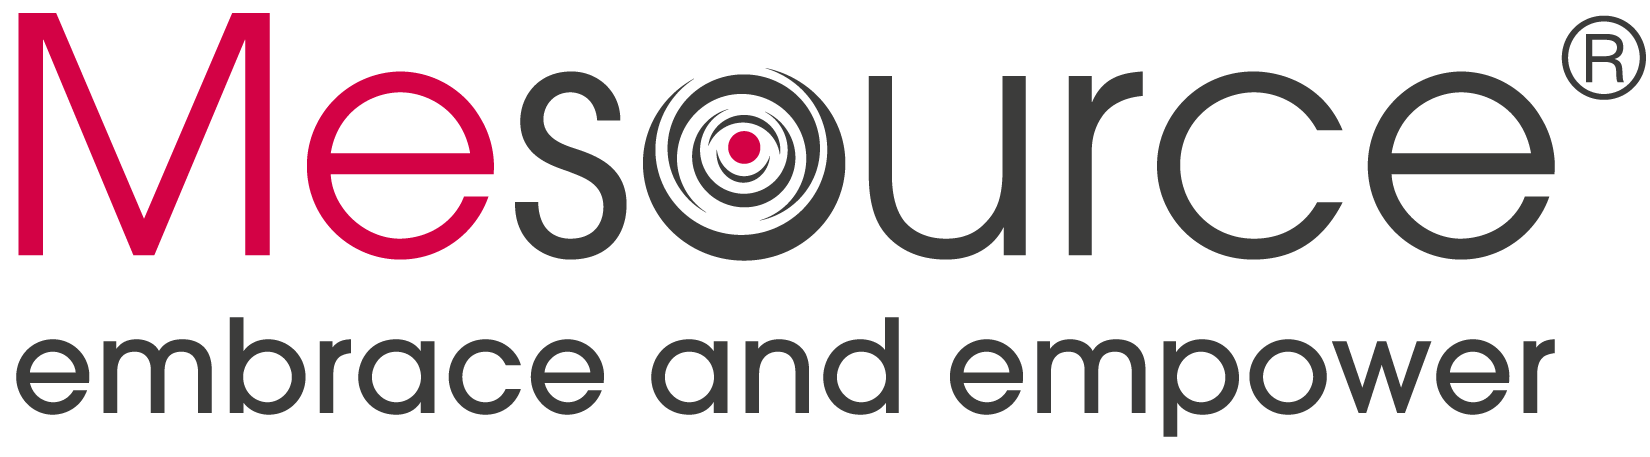 Logo mesource